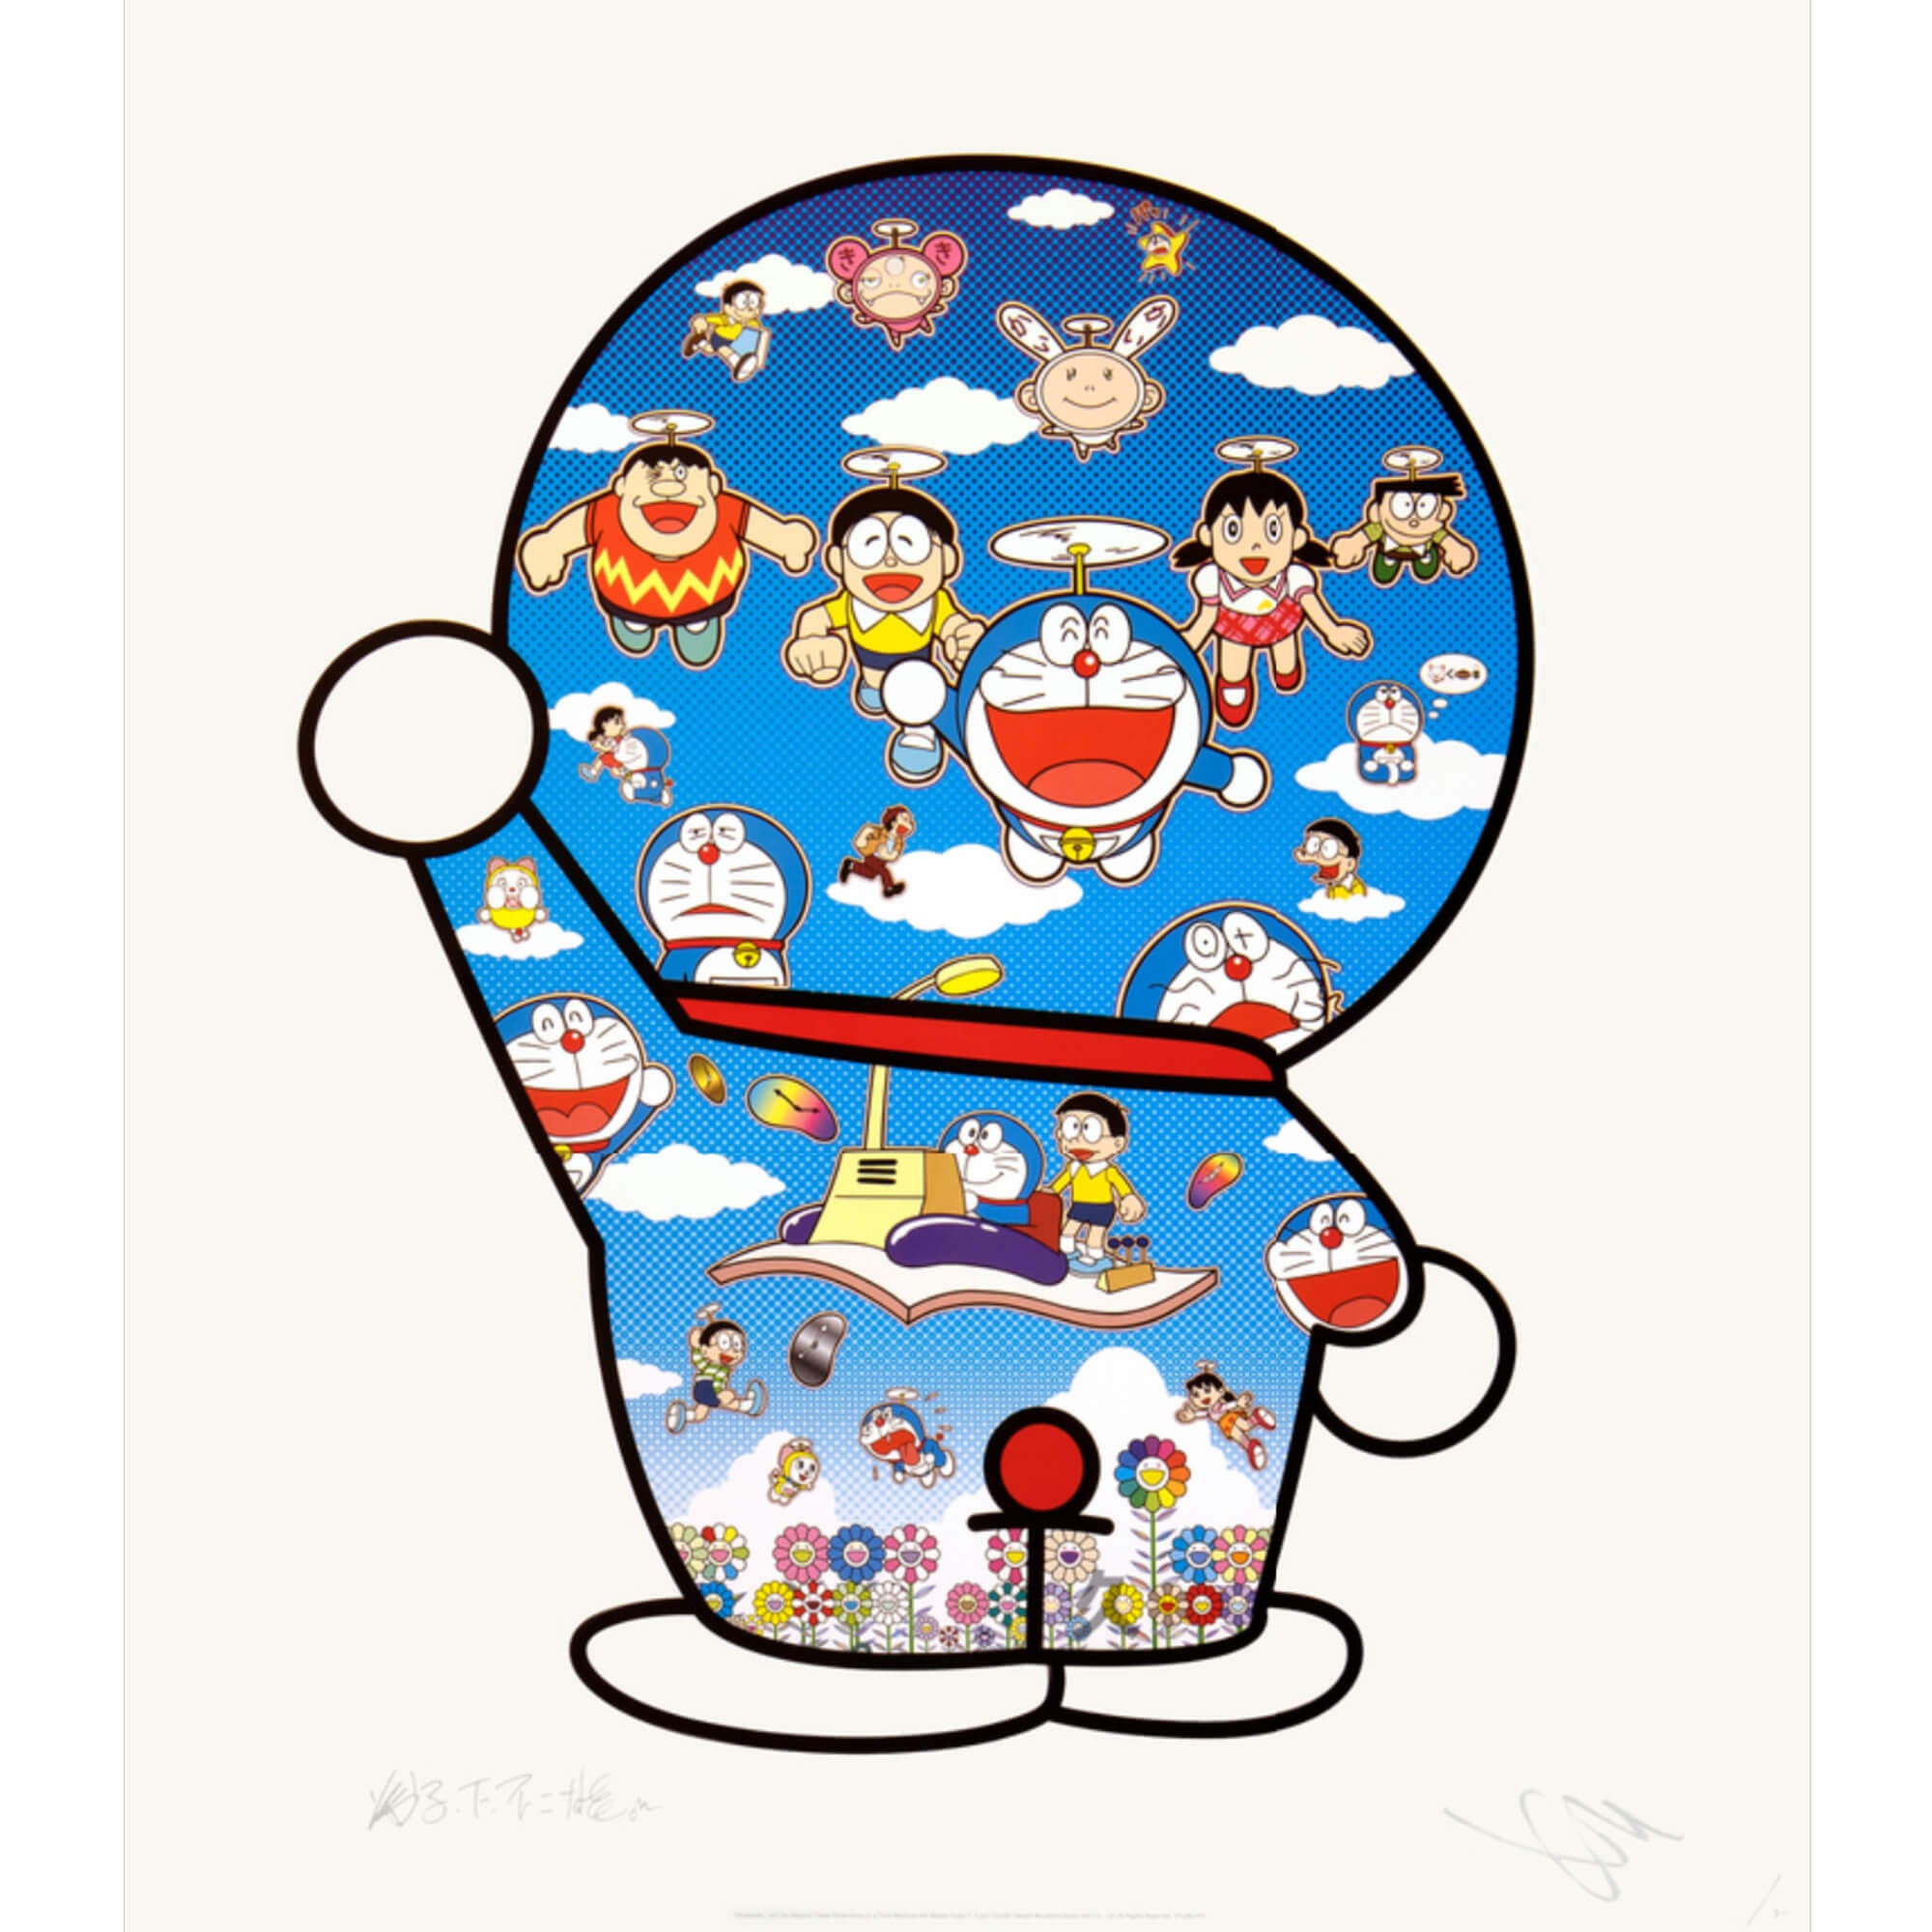 Doraemon And Friends Under The Blue Sky